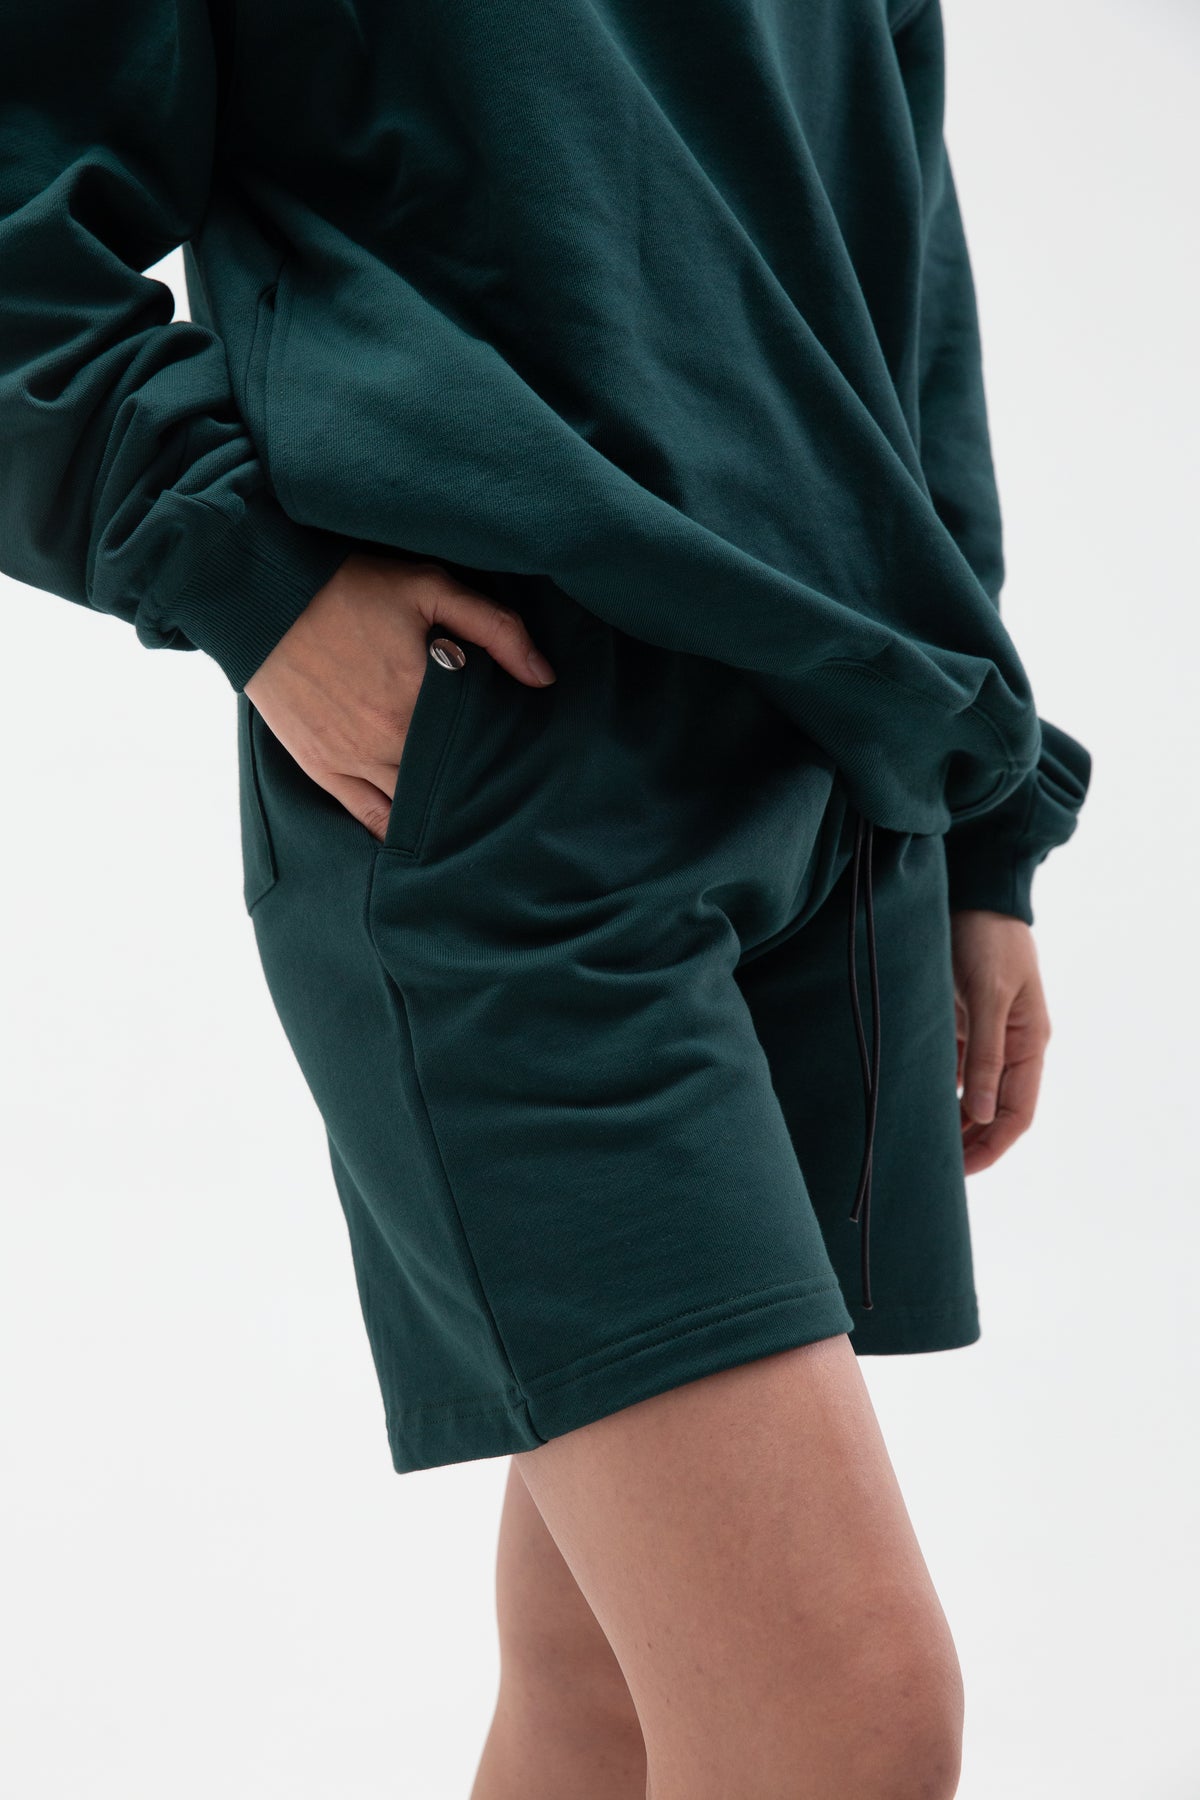 Blanks Shorts | Dark Green